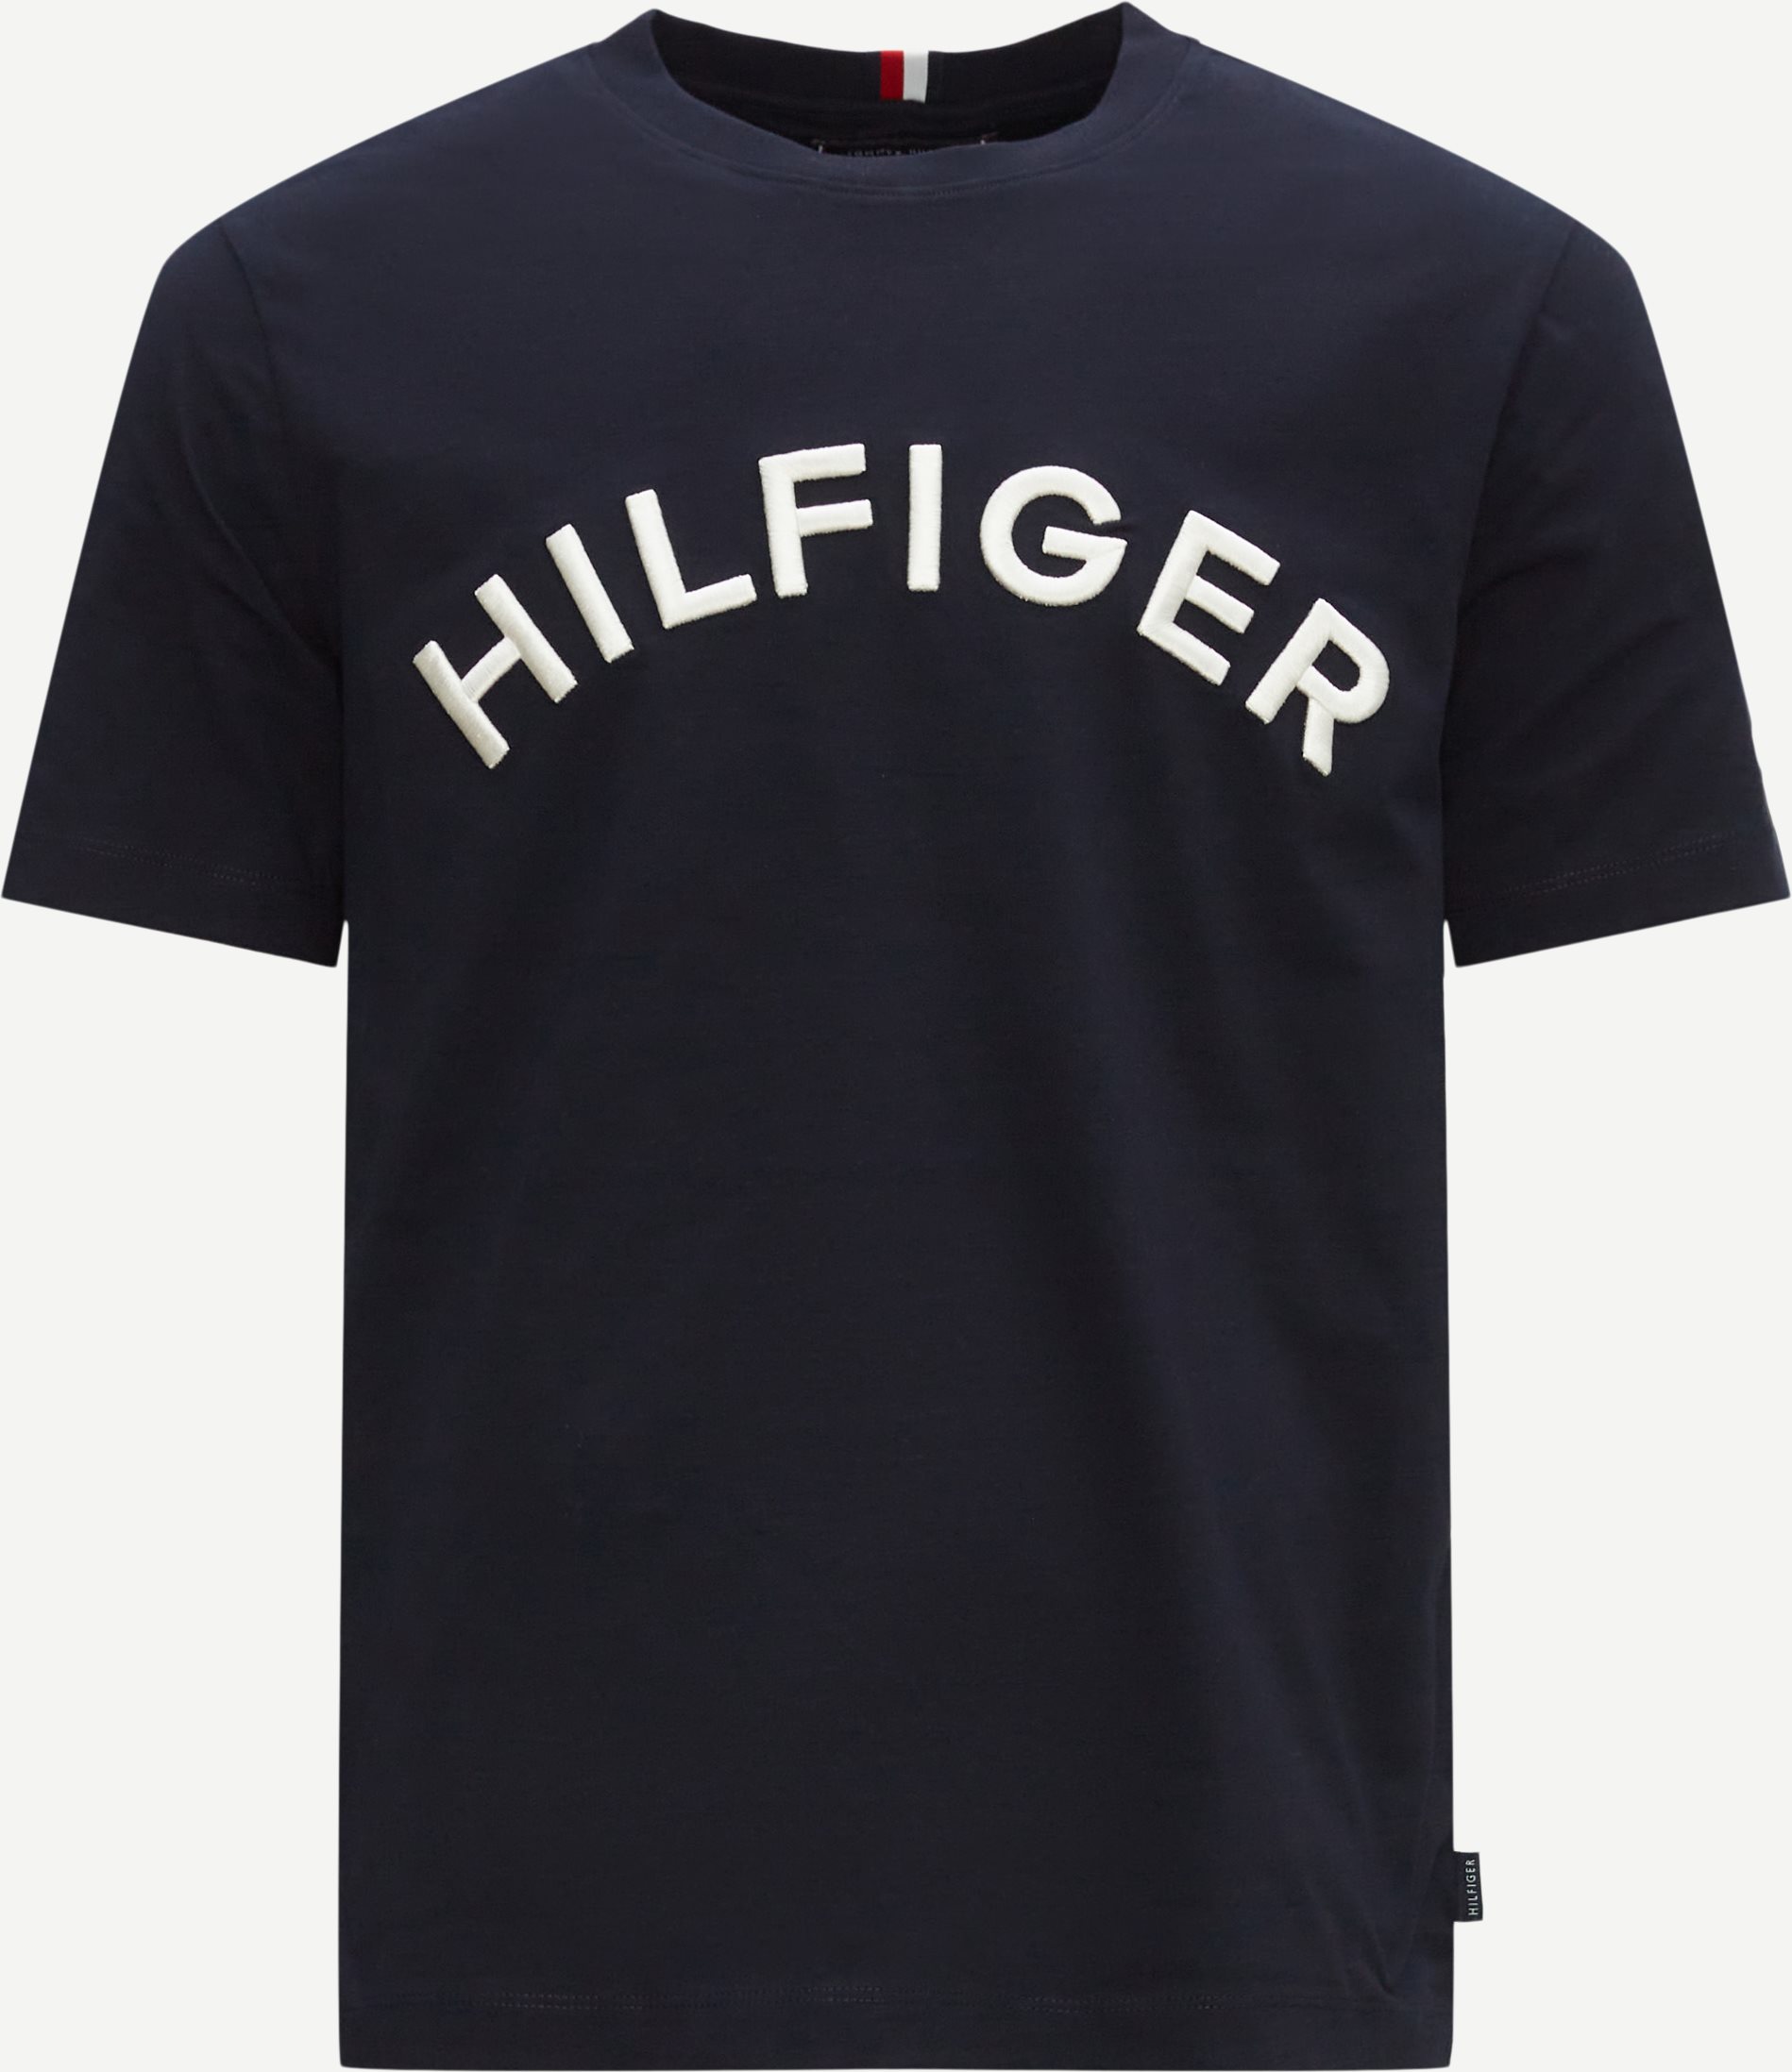 Tommy Hilfiger T-shirts 30055 HILFIGER ARCHED TEE Blue